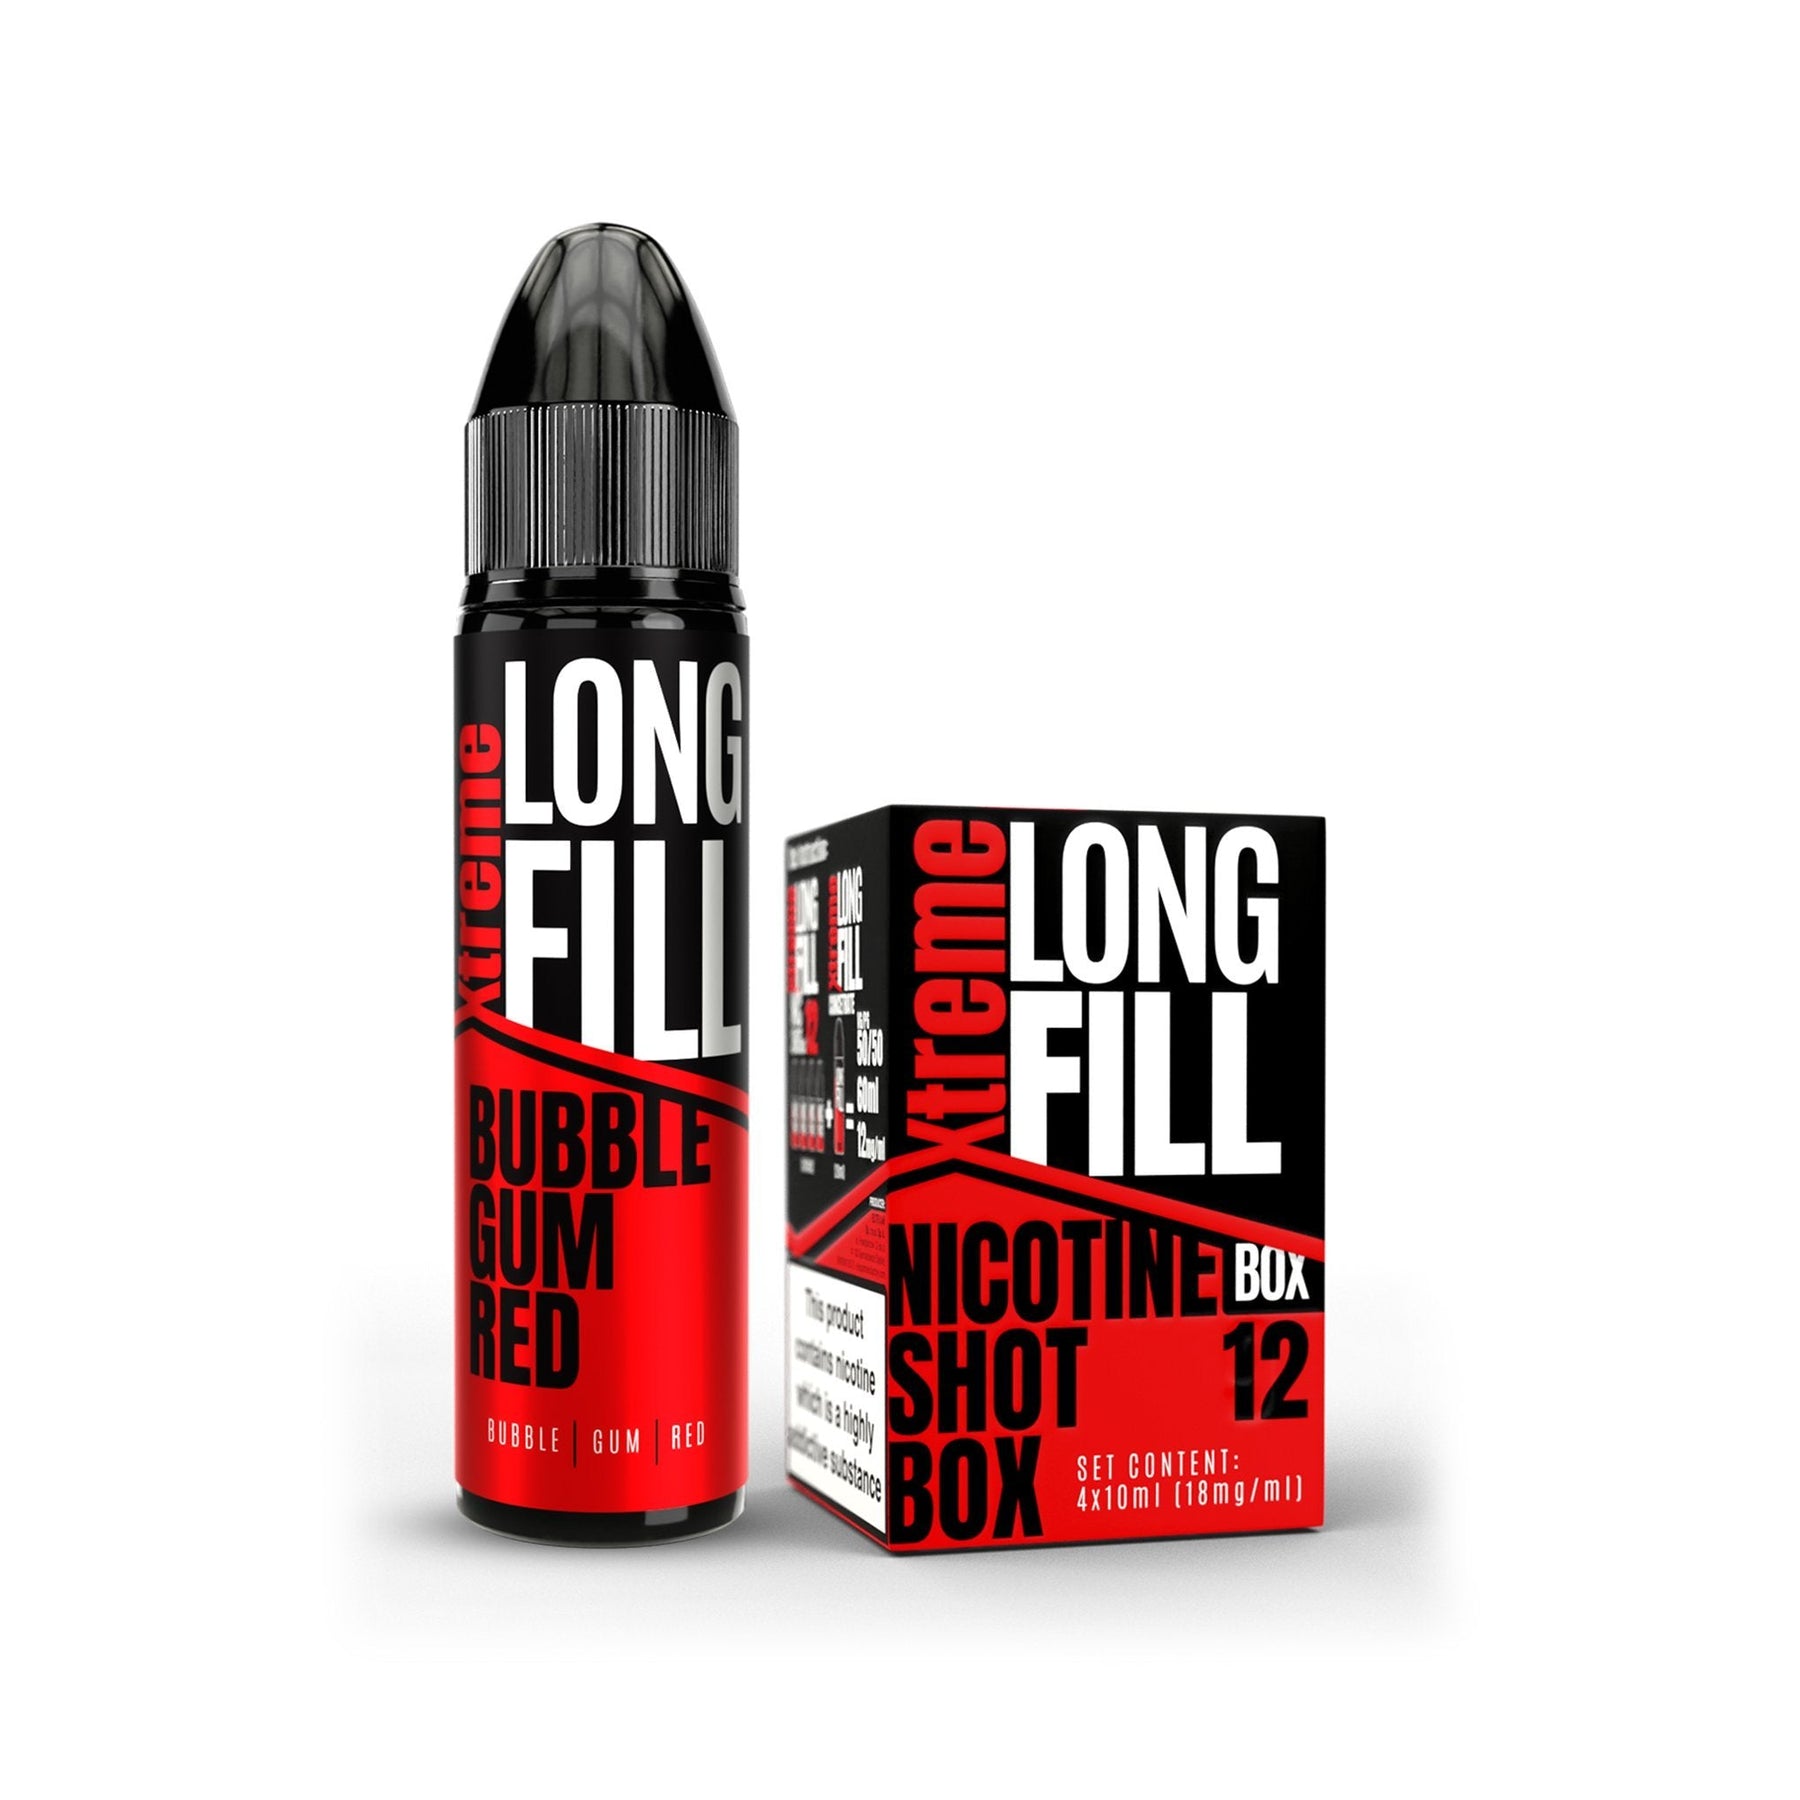 Xtreme Long Fill E-Liquid Bubble Gum Red 12MG - High Nicotine